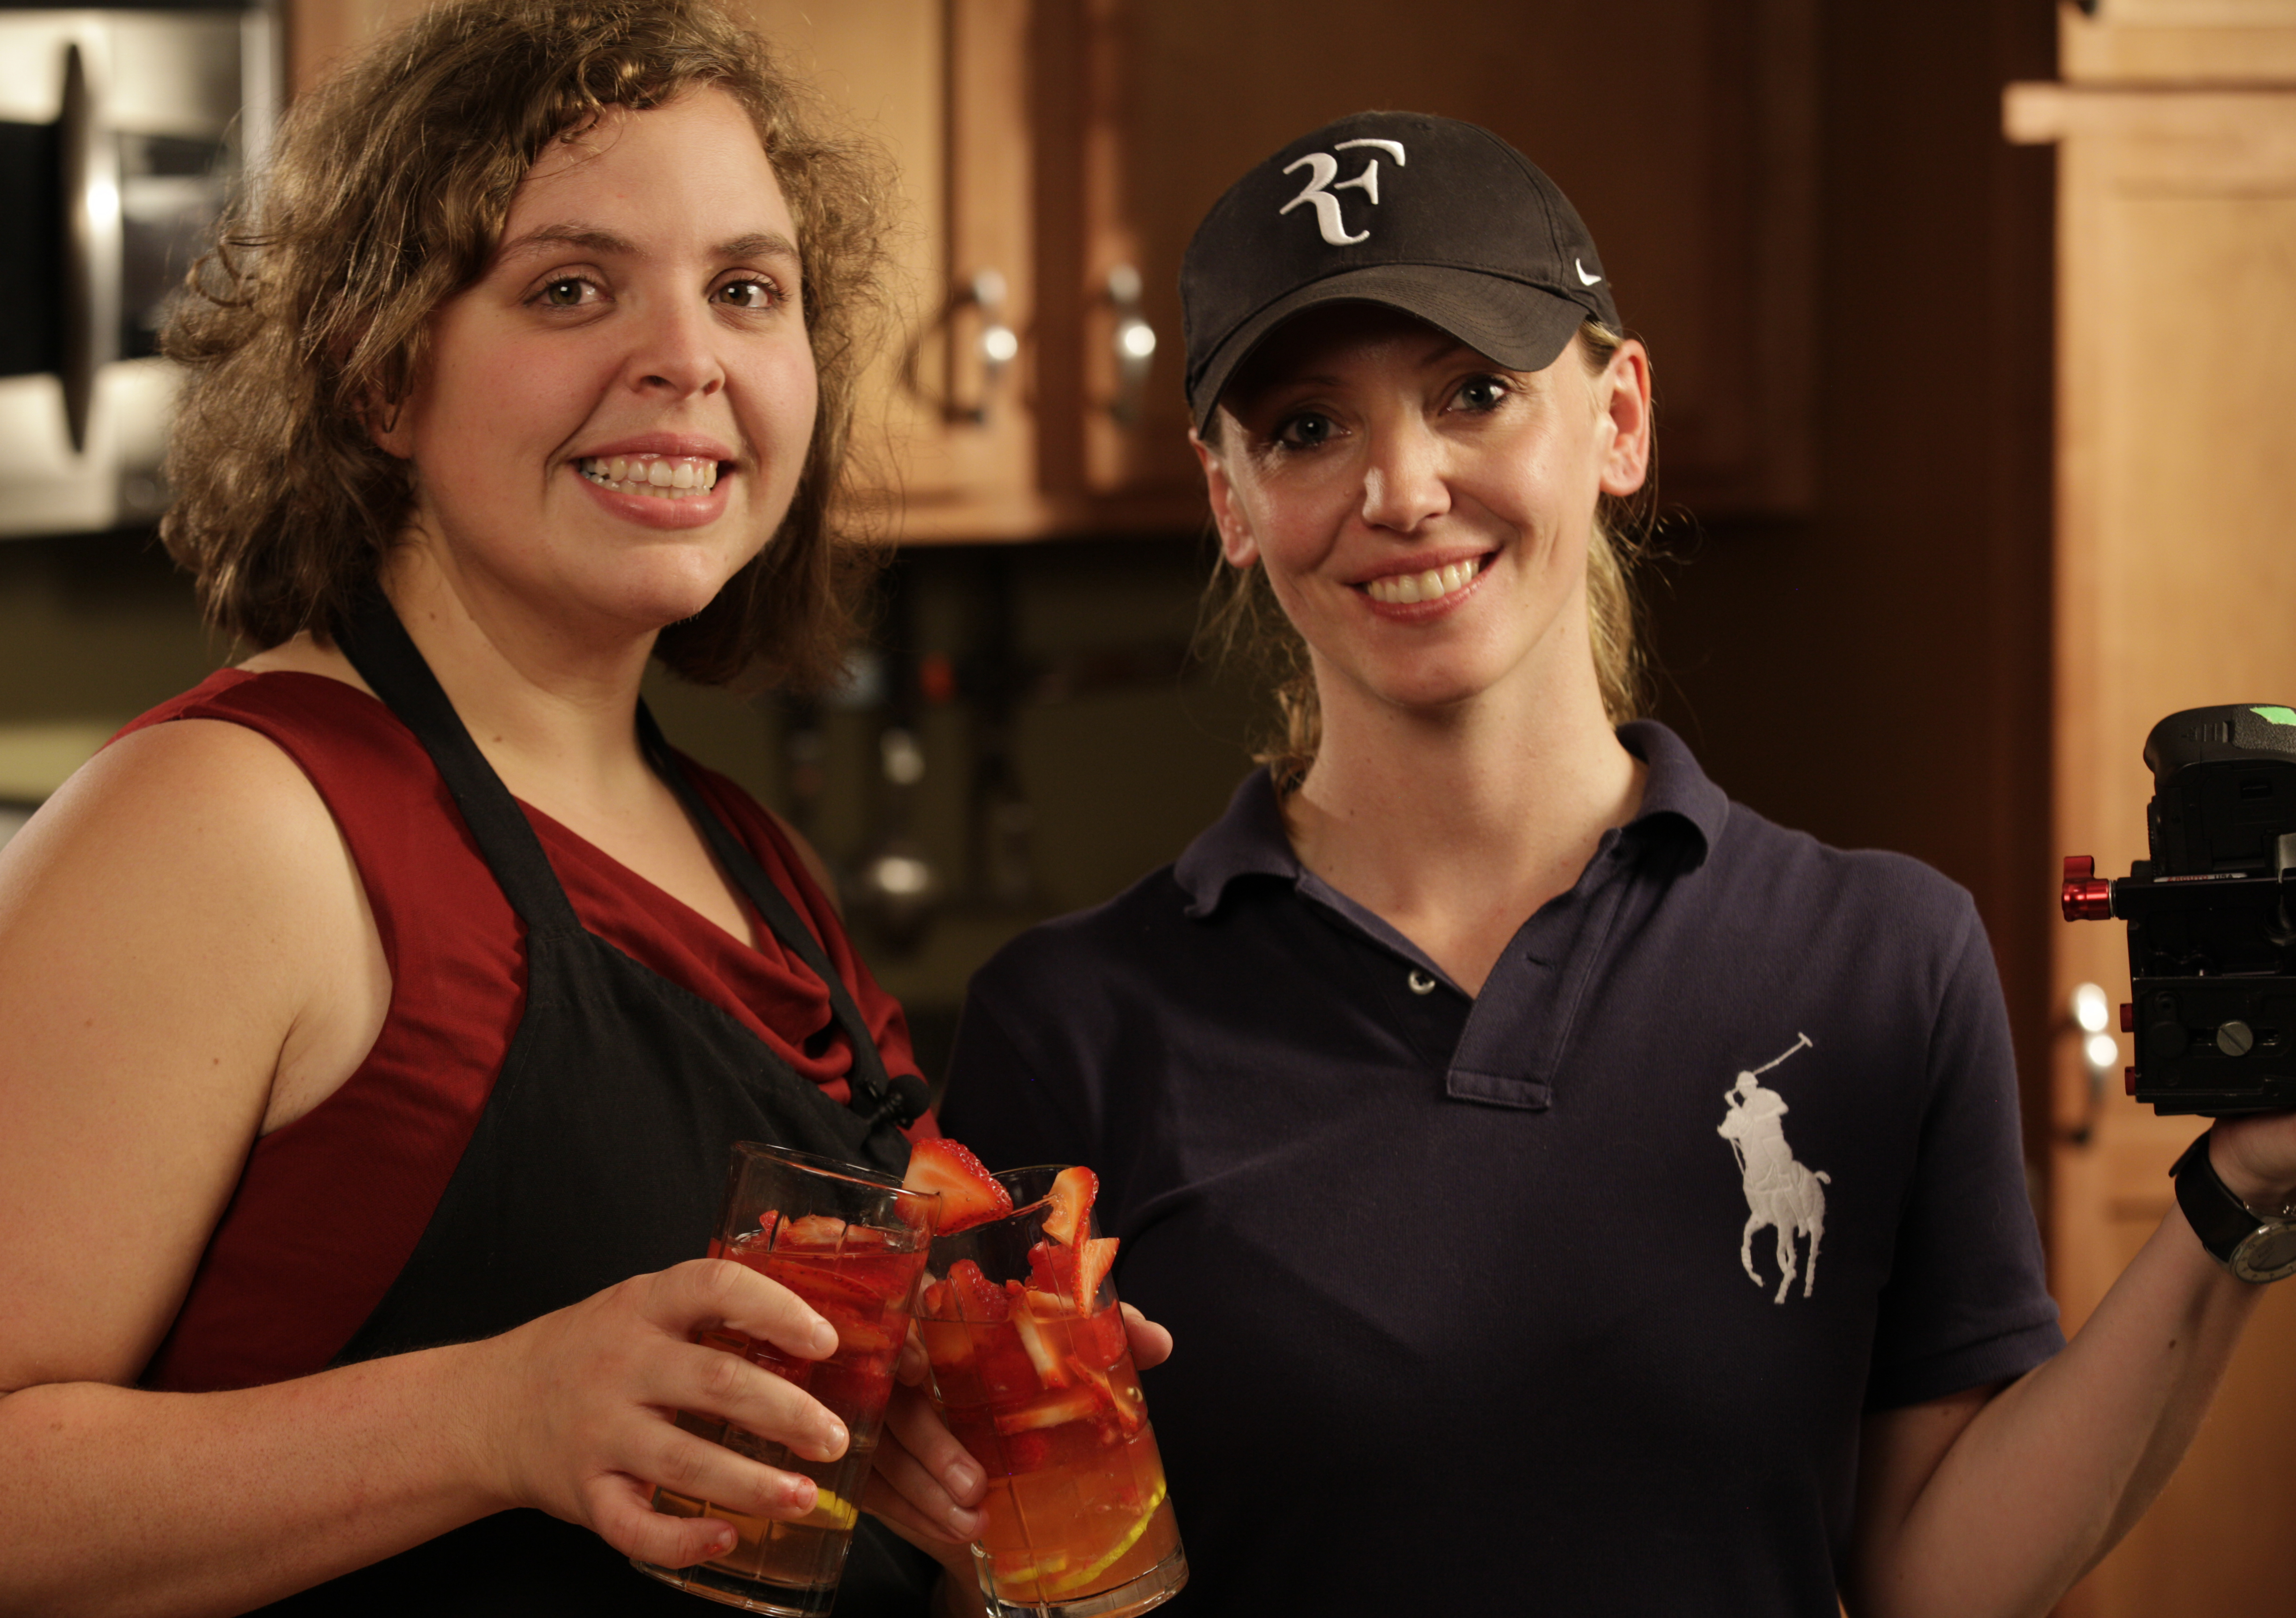 Patrycja Pawlak and Mary Poehnelt of Hell's Kitchen Season 11